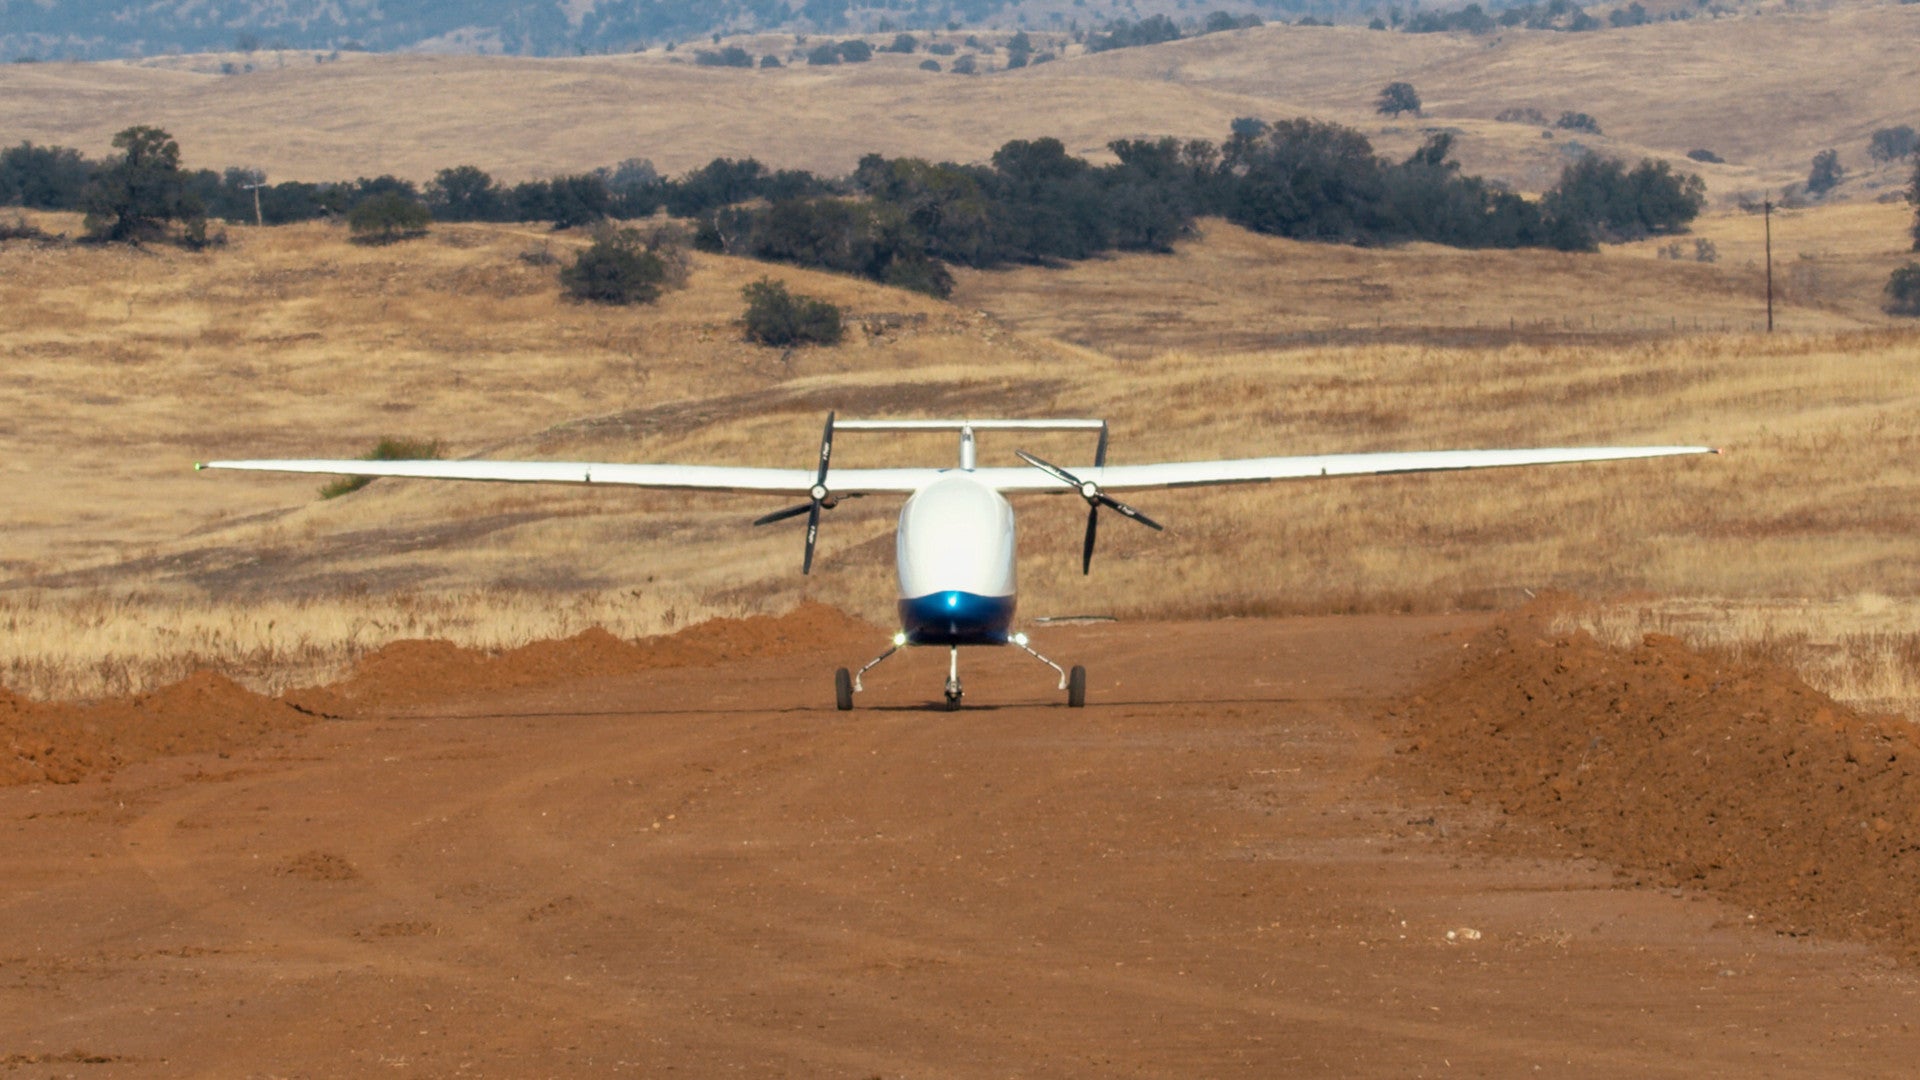 Pyka, SNC Partner to Offer Massive Cargo Drone to U.S. DOD